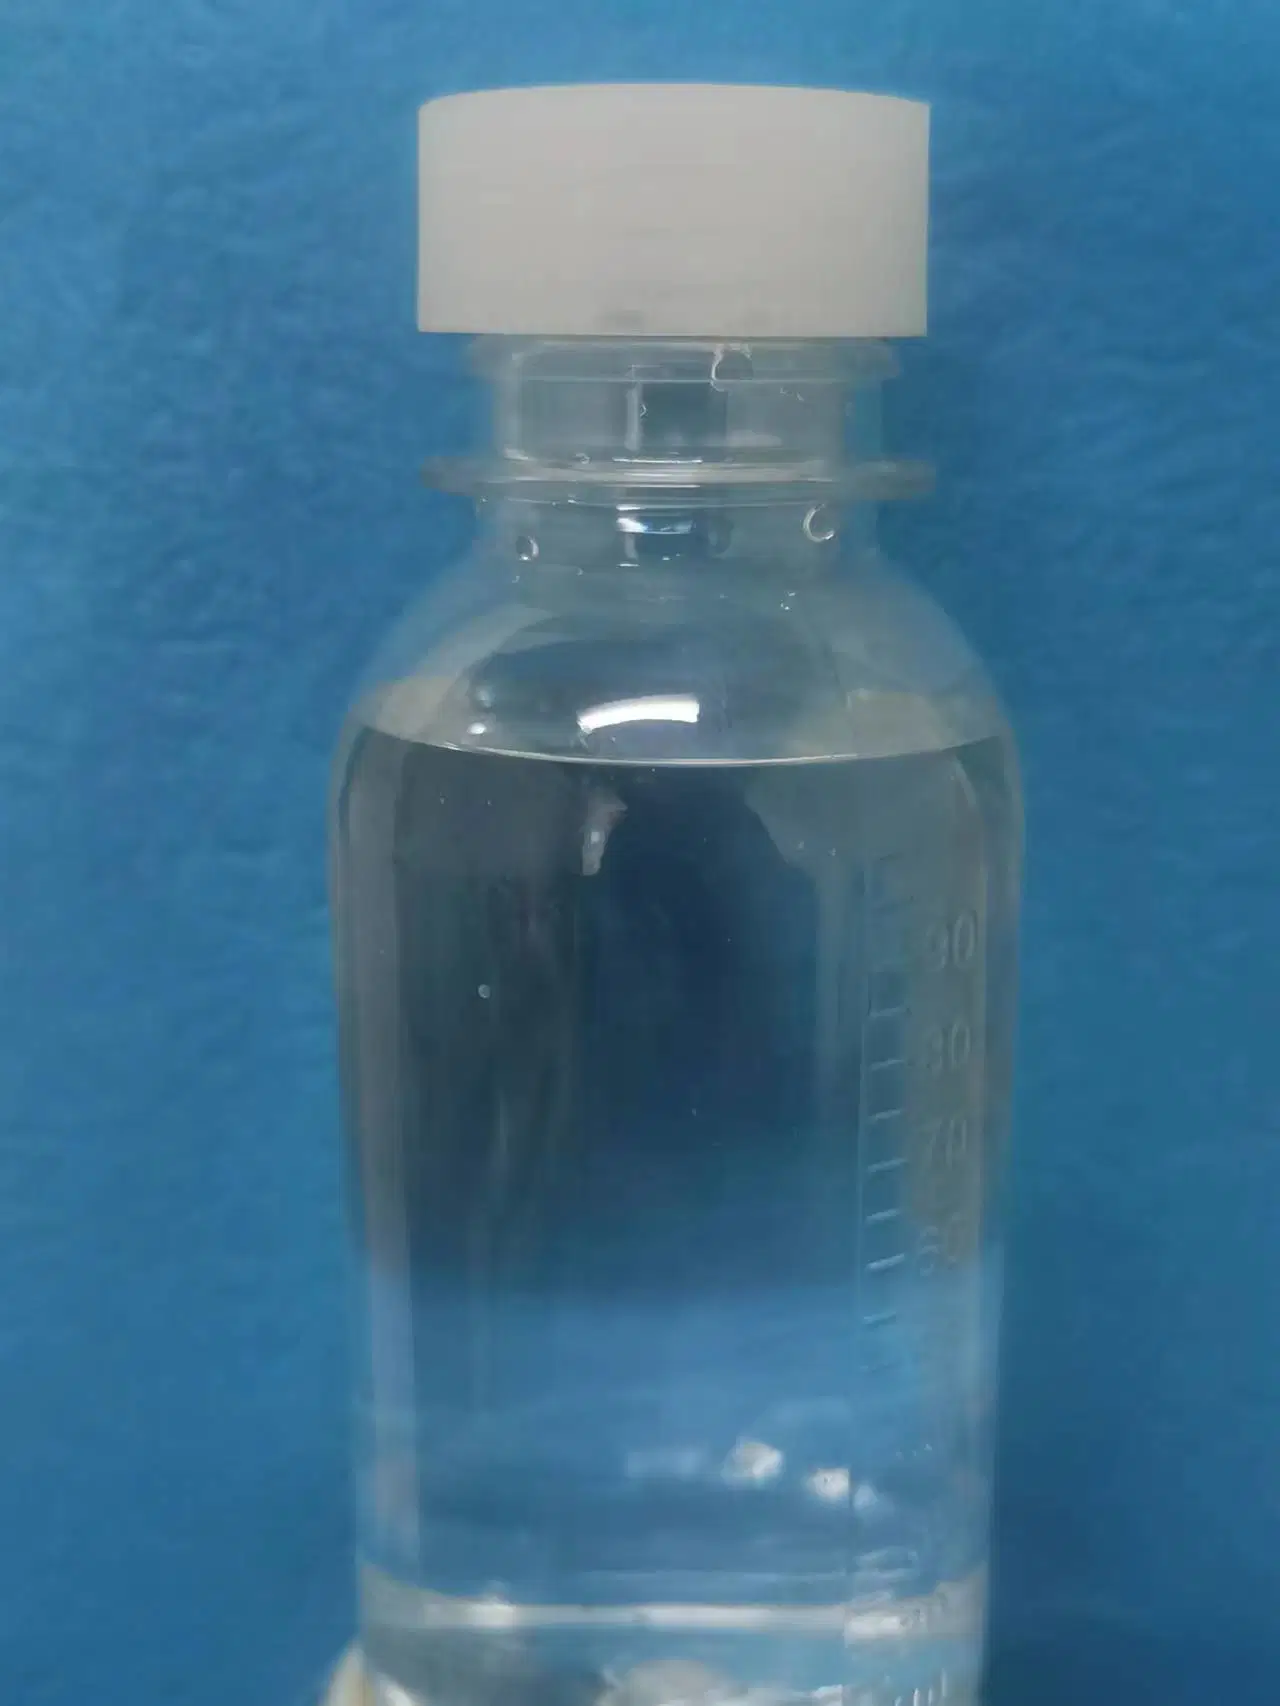 Venda de fábrica de cristal branco 99% de sulfato de amónio CAS#7783-20-2